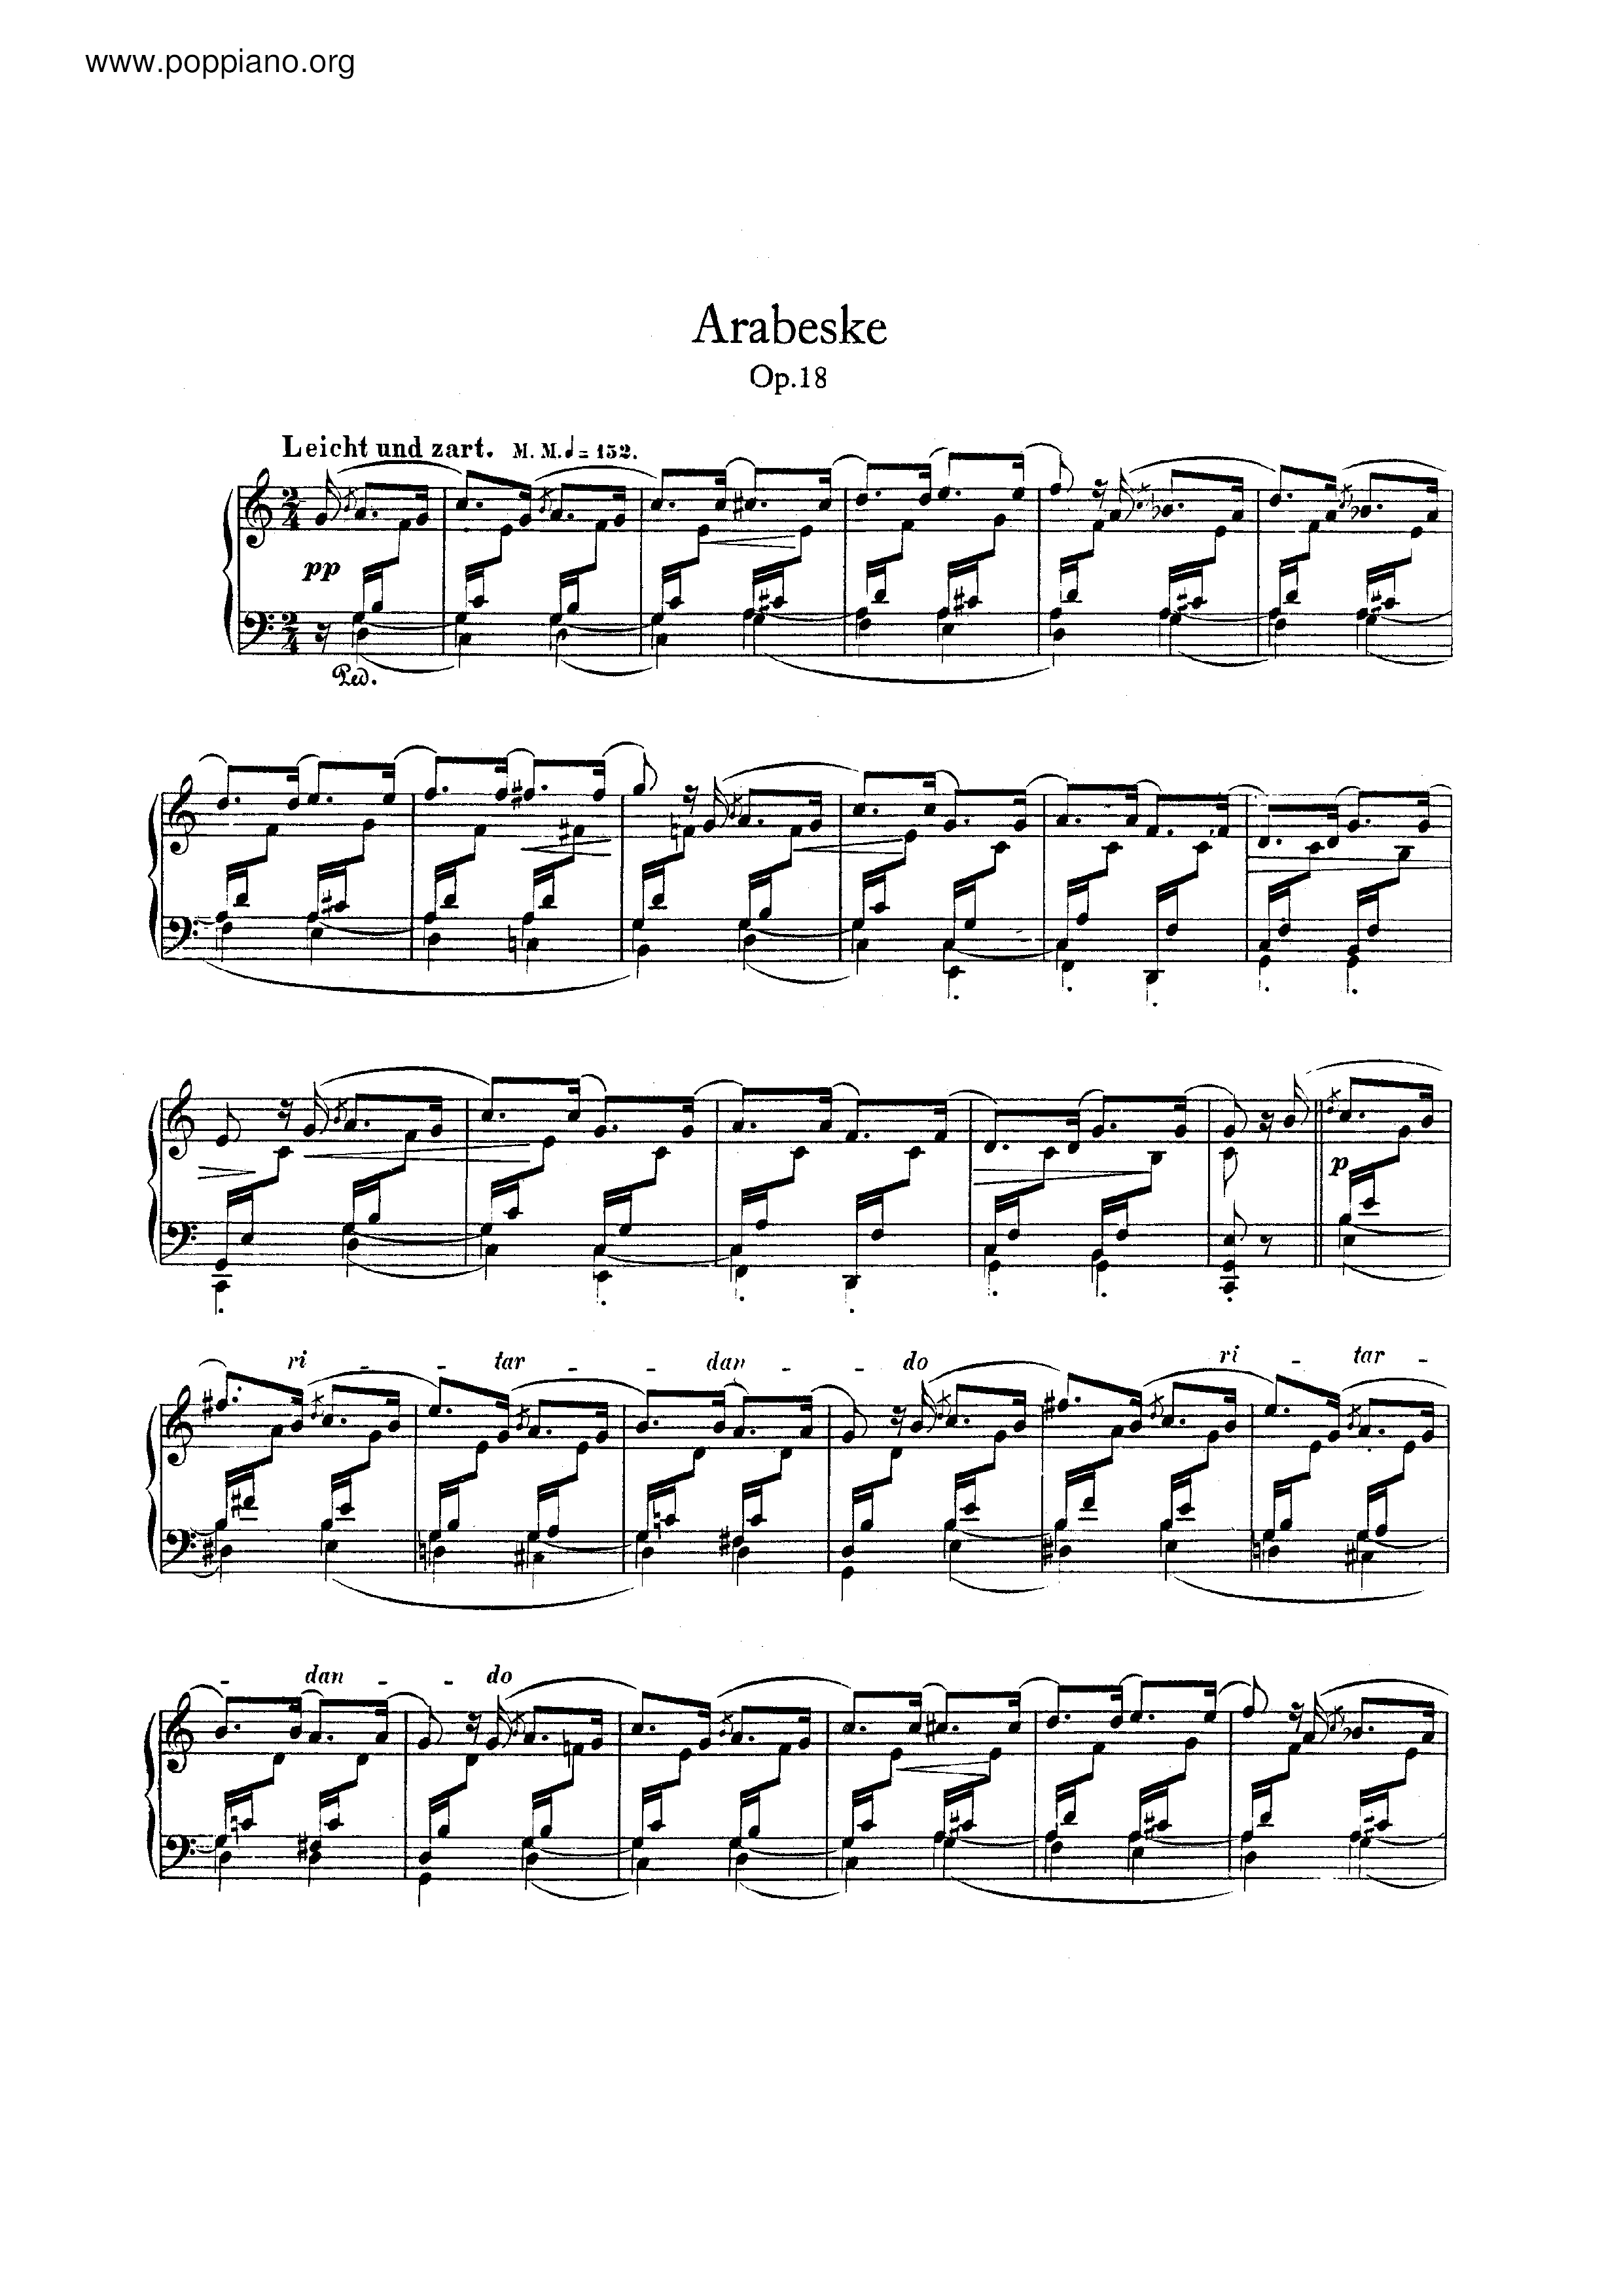 Arabeske, Op.18ピアノ譜